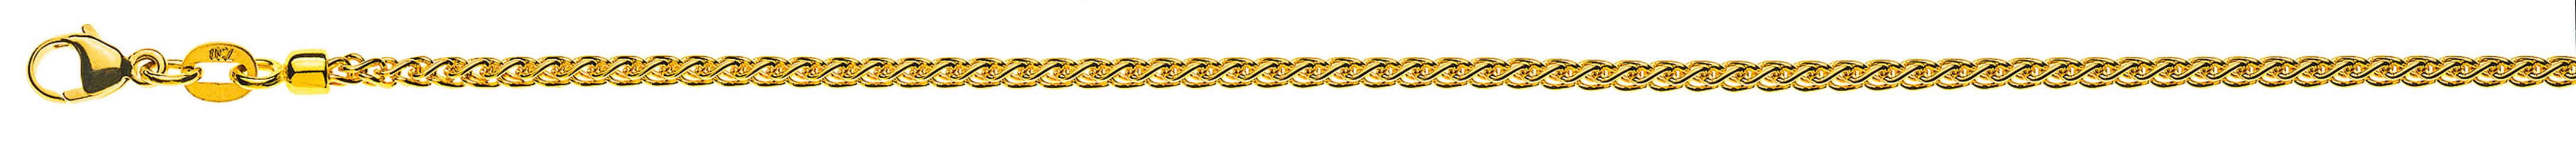 AURONOS Prestige Necklace yellow gold 18K cable chain 55cm 2.15mm